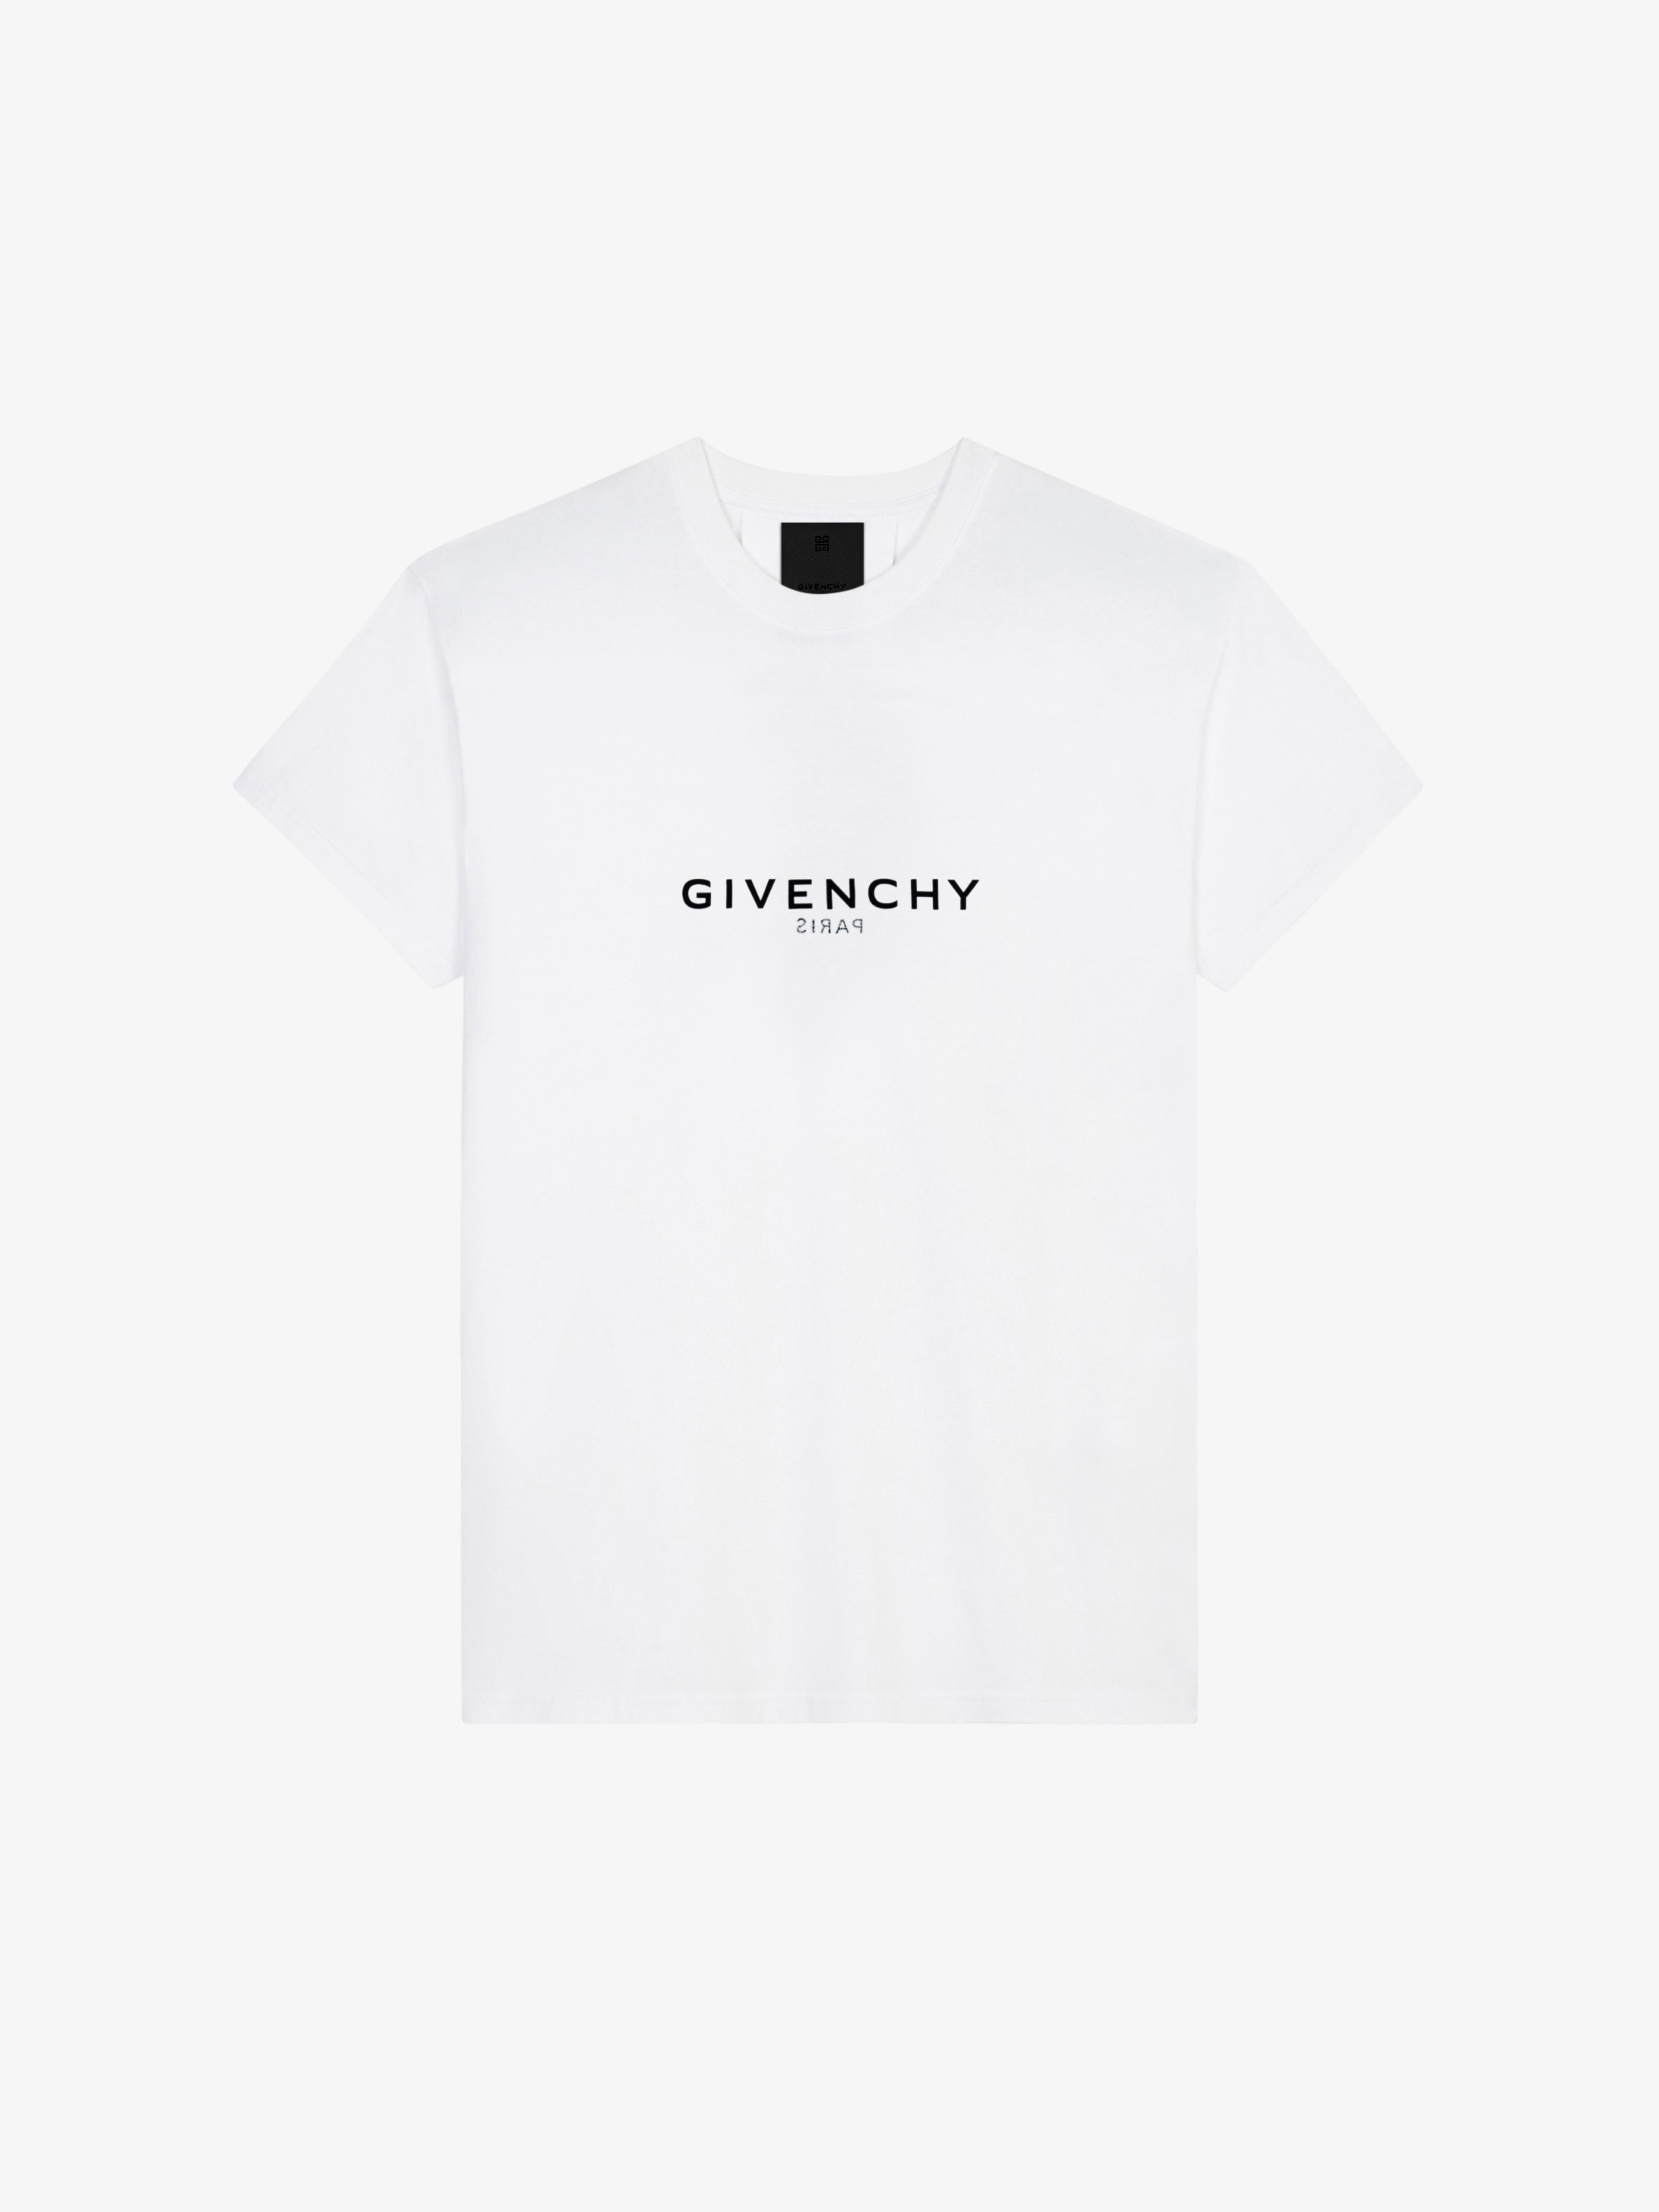 GIVENCHY Reverse slim fit t-shirt | GIVENCHY Paris